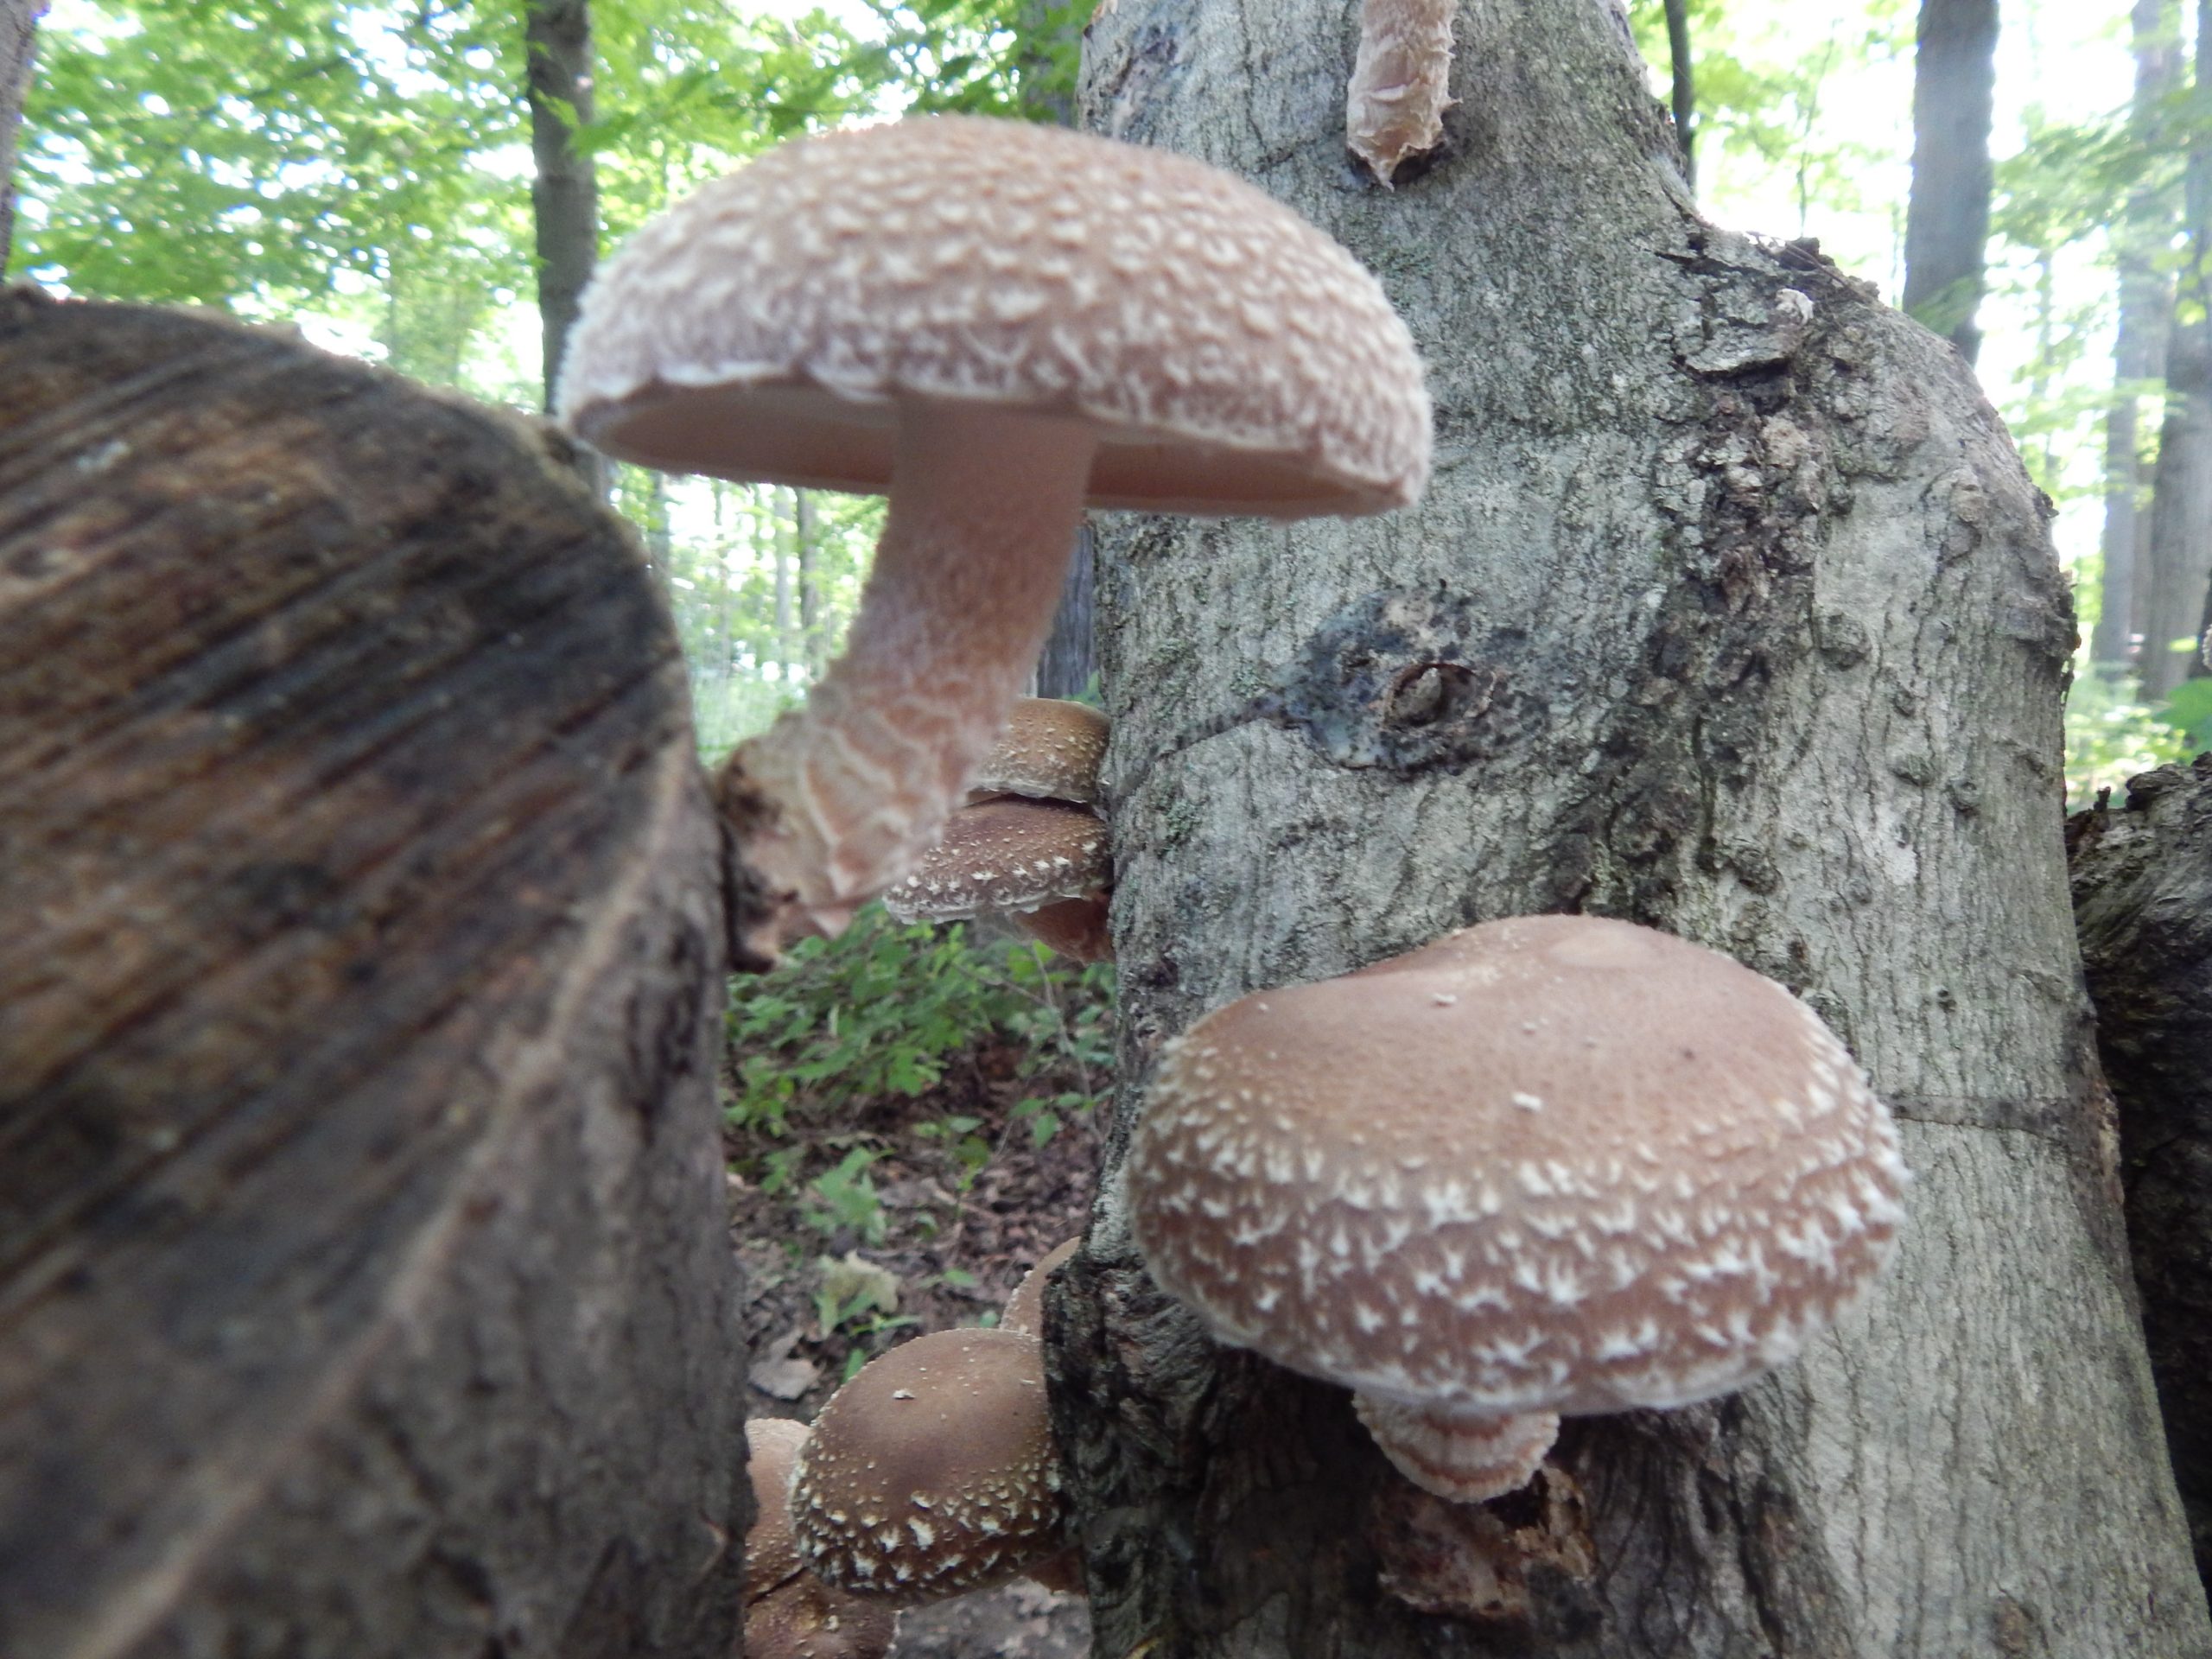 Shiitake Mushrooms growing out of a log